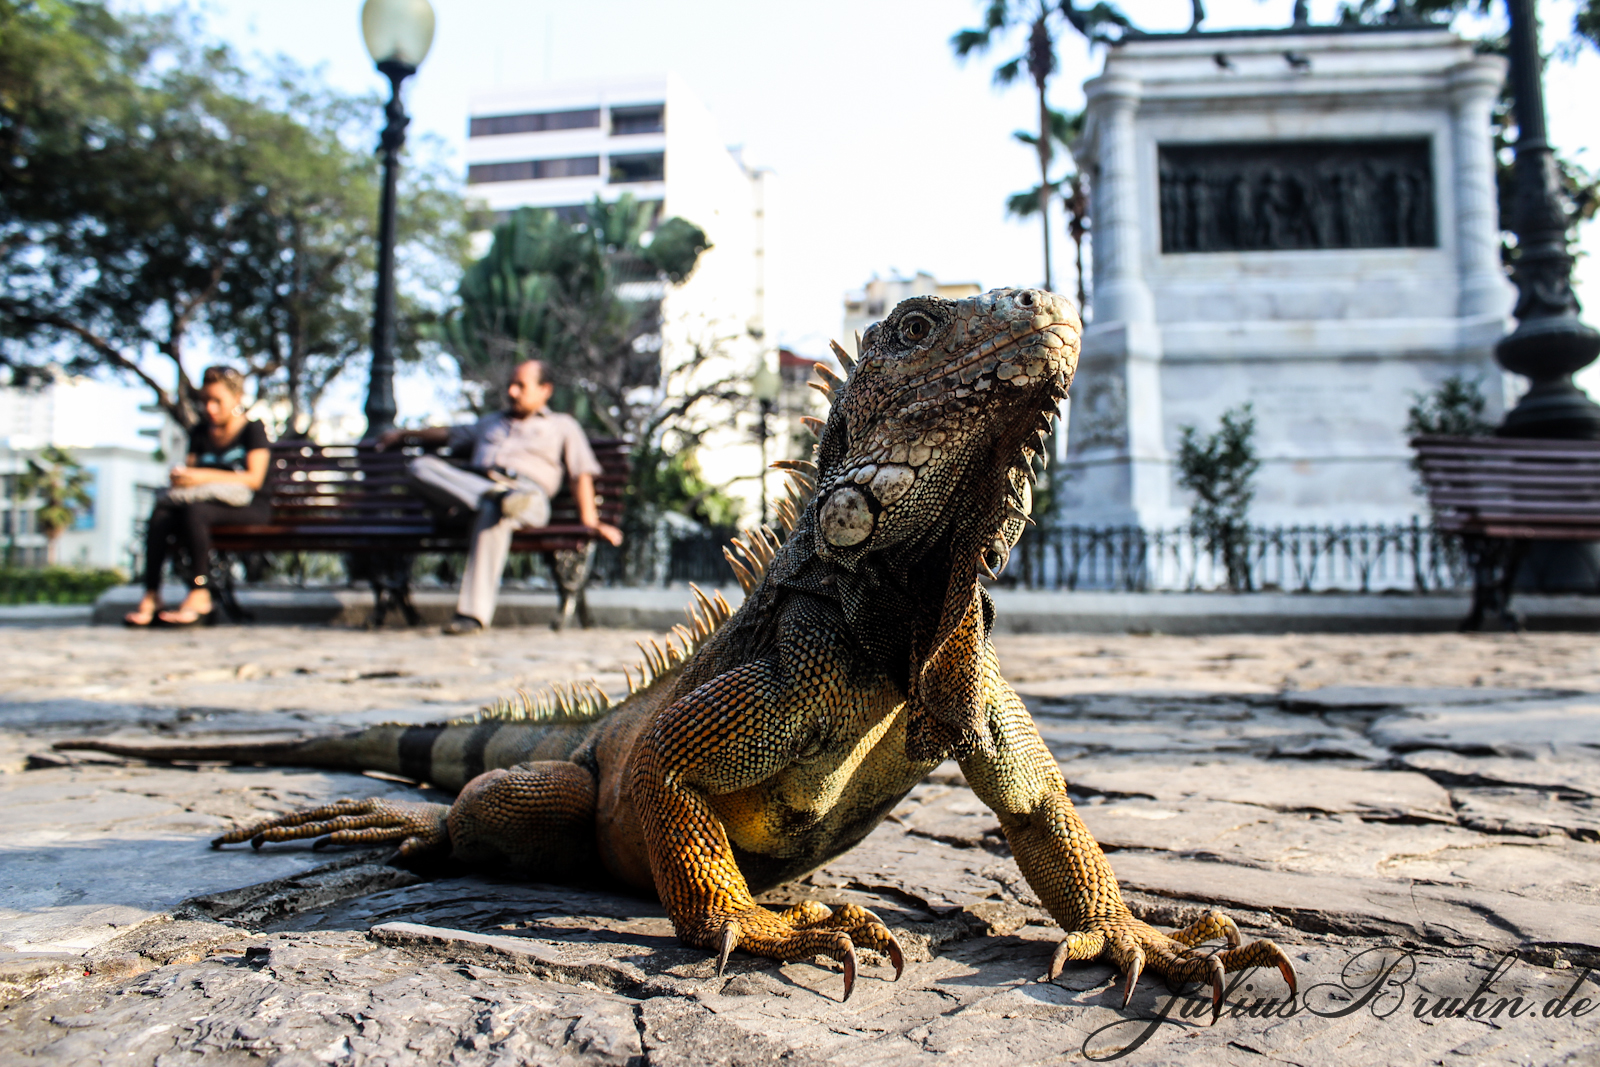 Parque de las Iguanas, Guayaquil